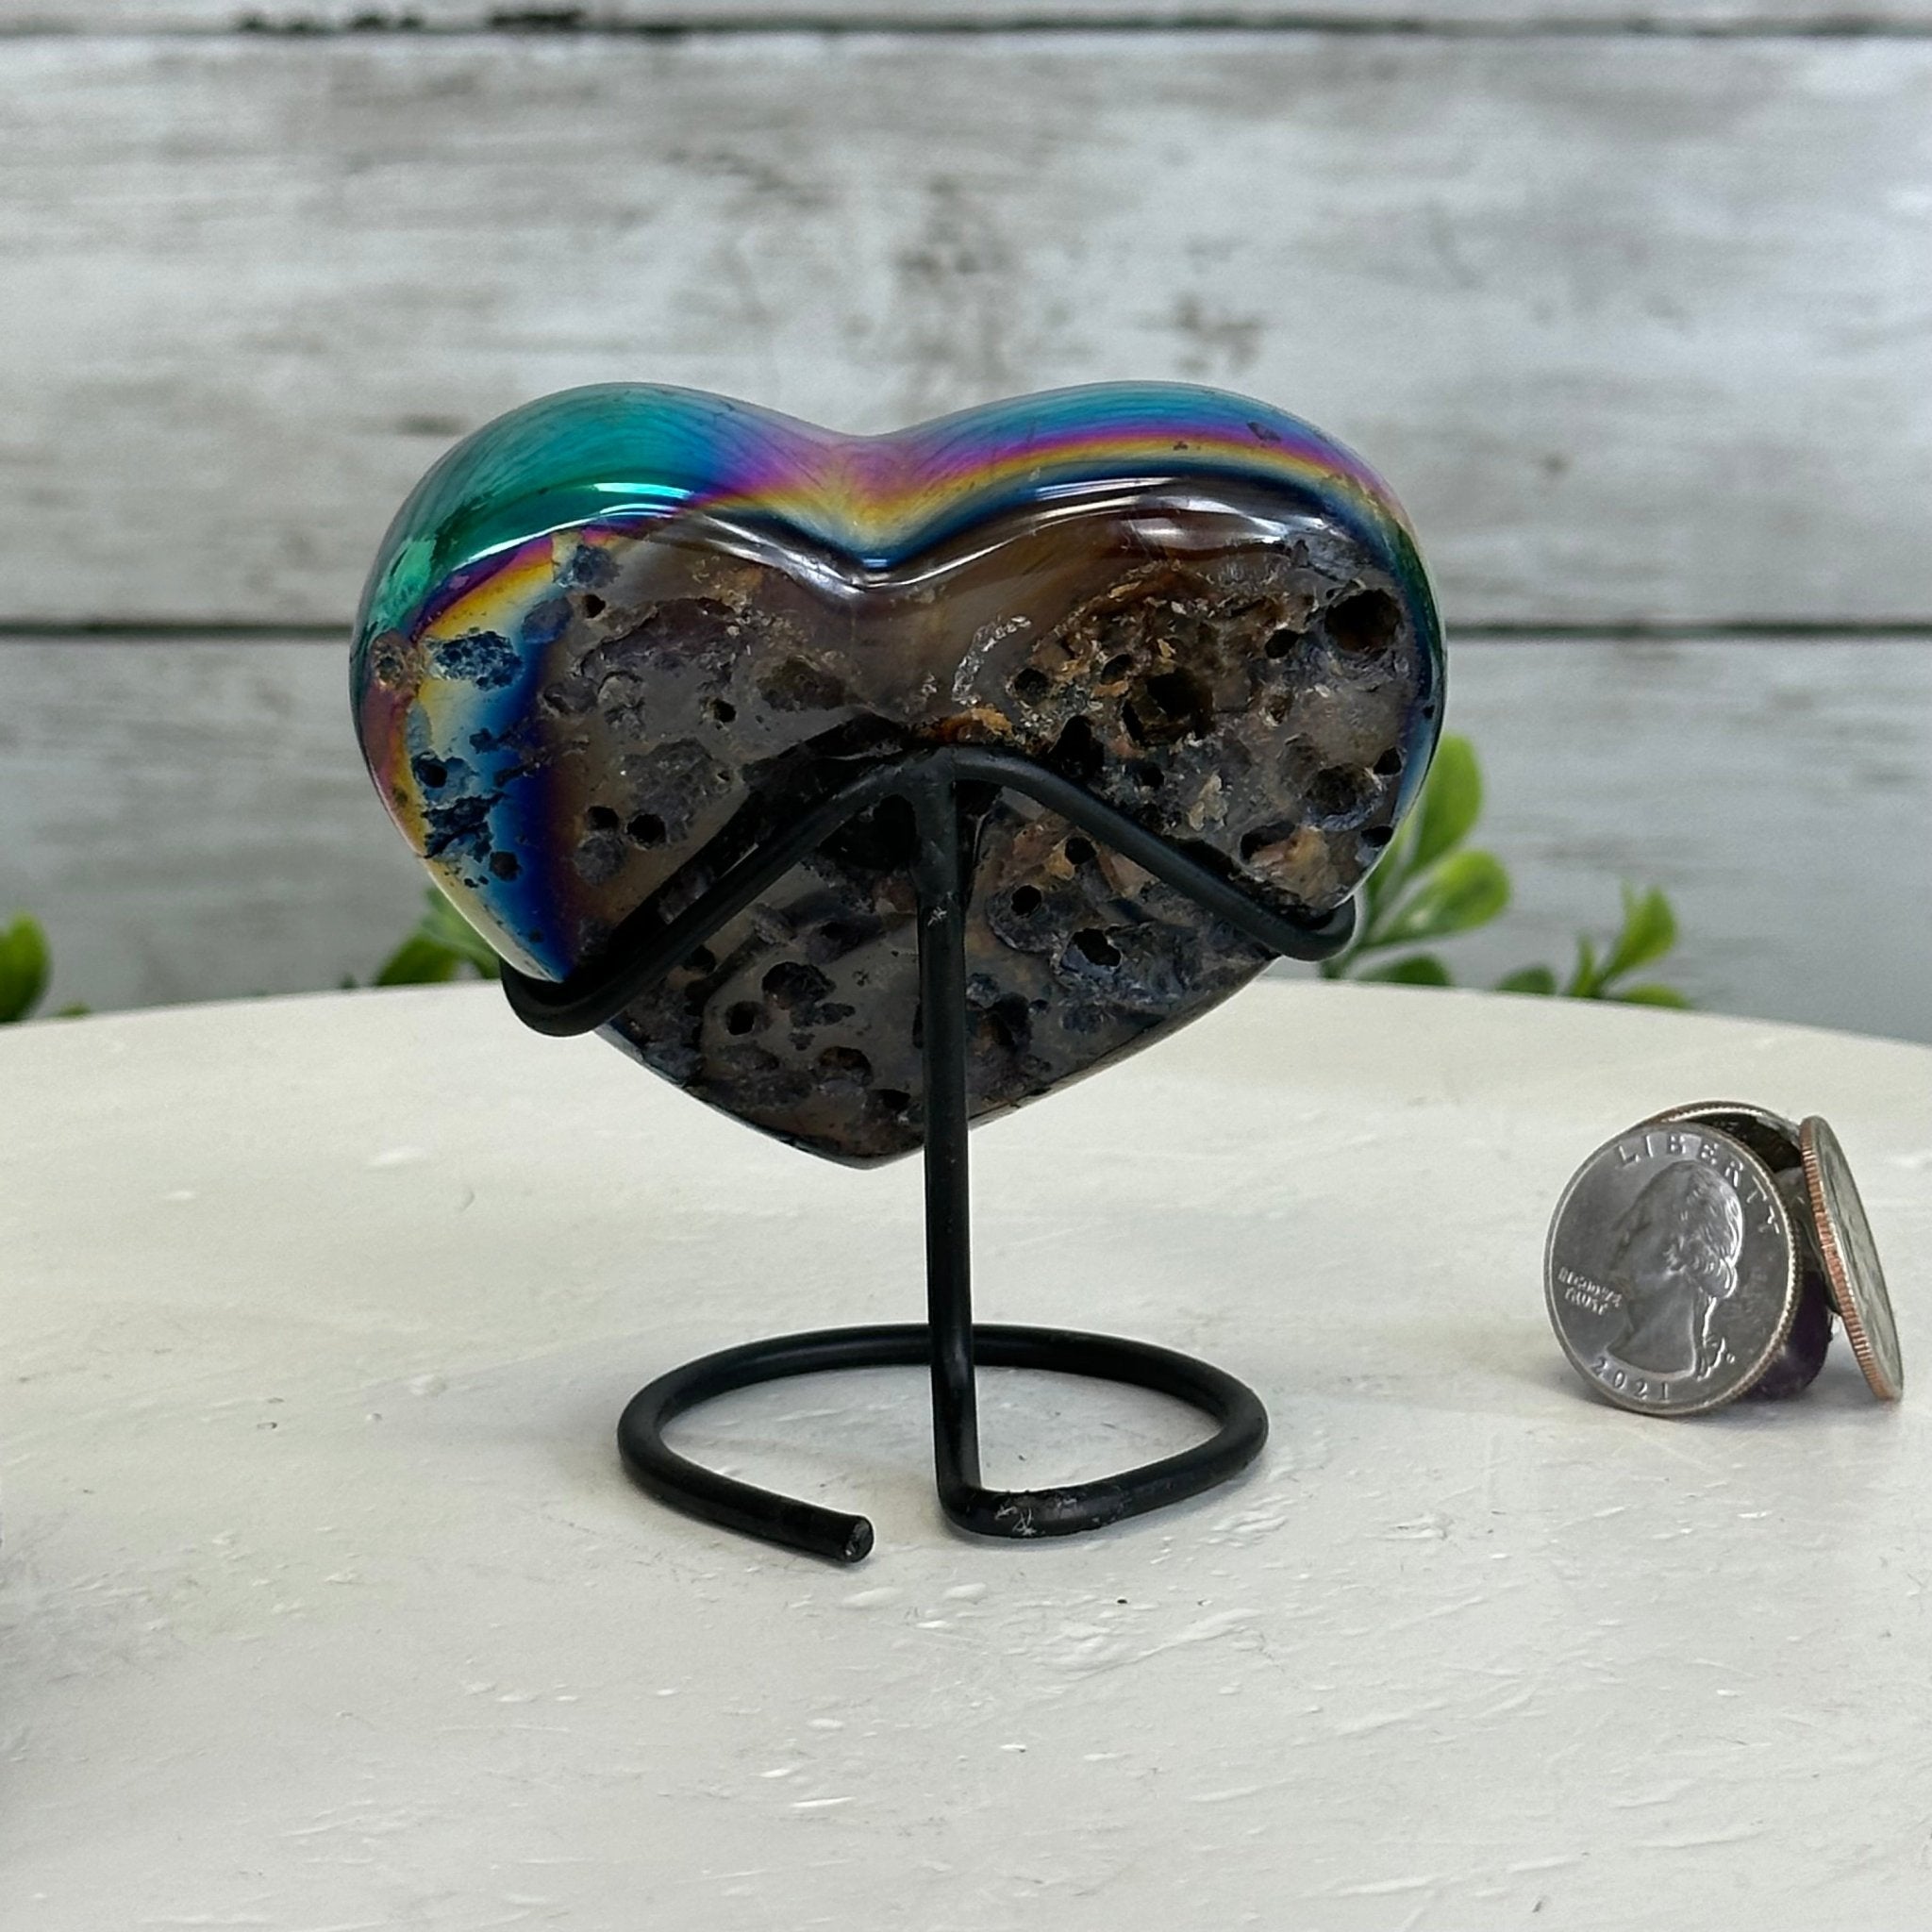 Rainbow Aura Amethyst Heart on a Metal Stand, 0.6 lbs & 3.6" Tall #5463RA-017 - Brazil GemsBrazil GemsRainbow Aura Amethyst Heart on a Metal Stand, 0.6 lbs & 3.6" Tall #5463RA-017Hearts5463RA-017